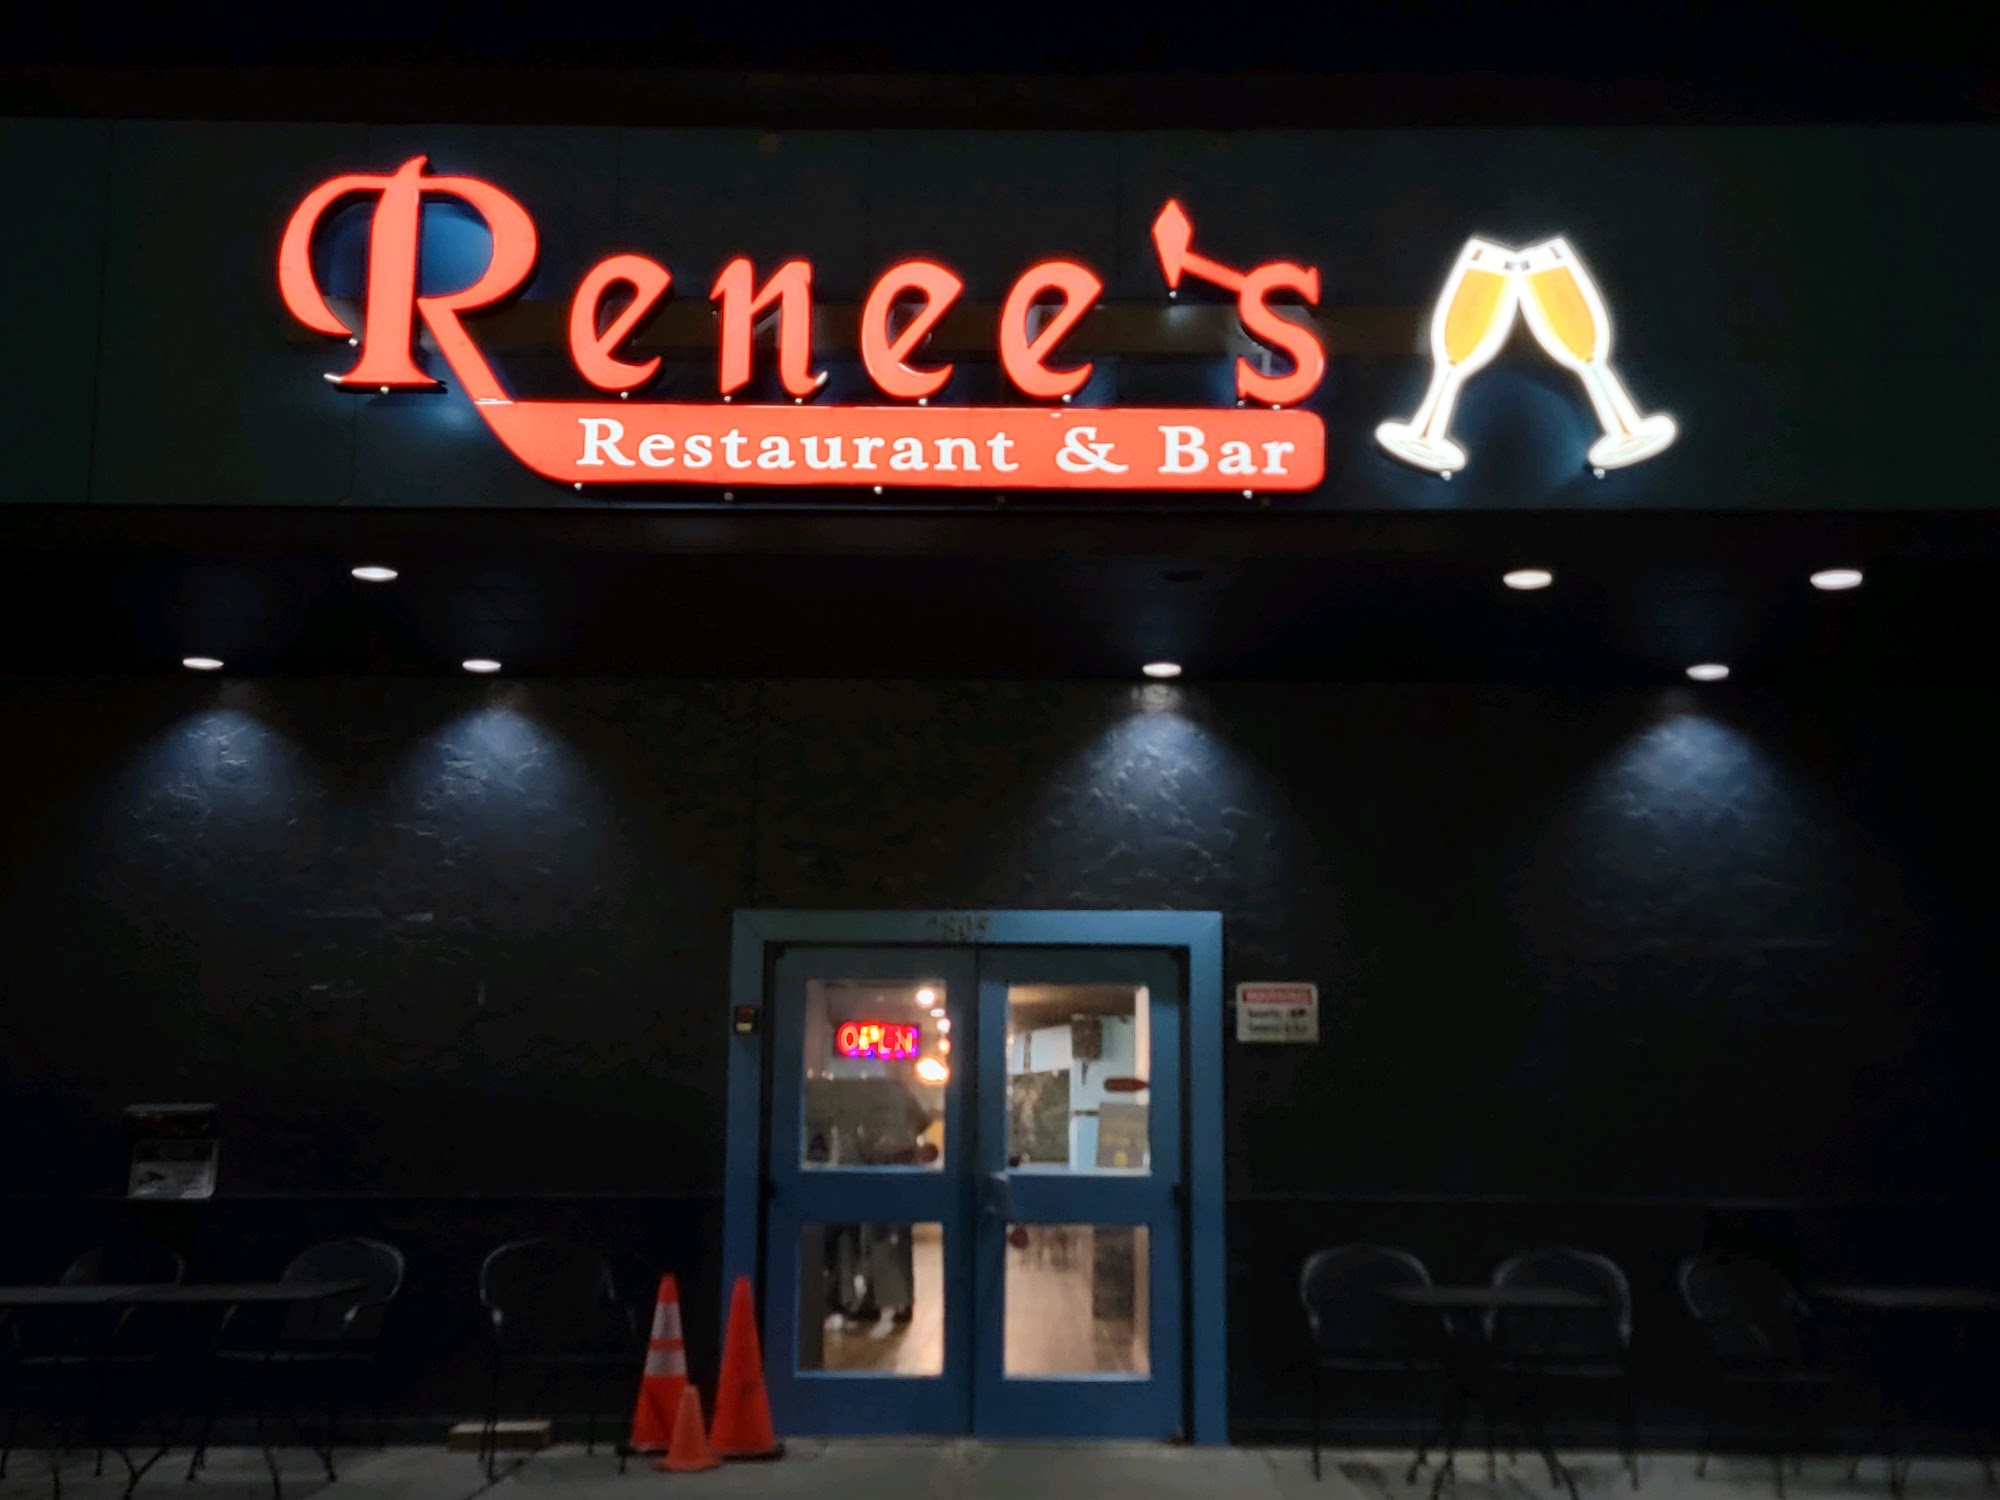 Renee's Restaurant & Bar